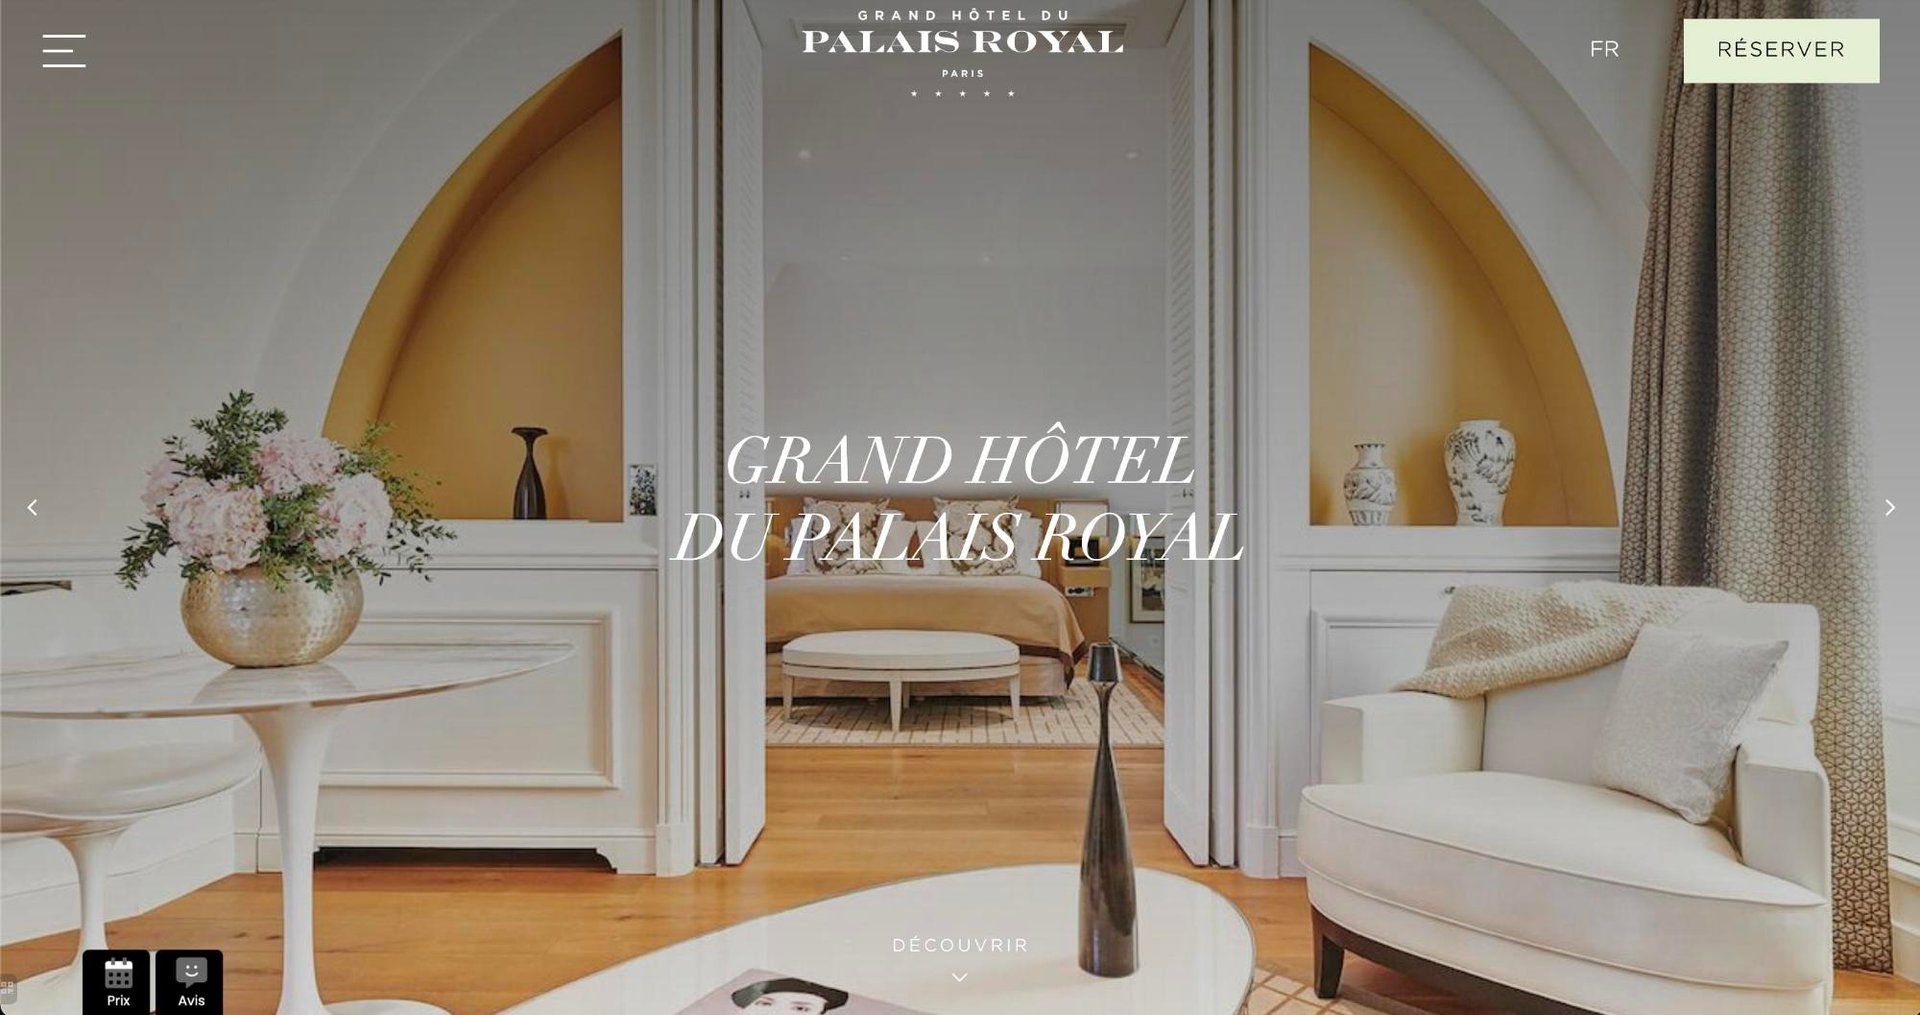 Agence MMCréation | Portfolio Grand Hôtel du Palais Royal